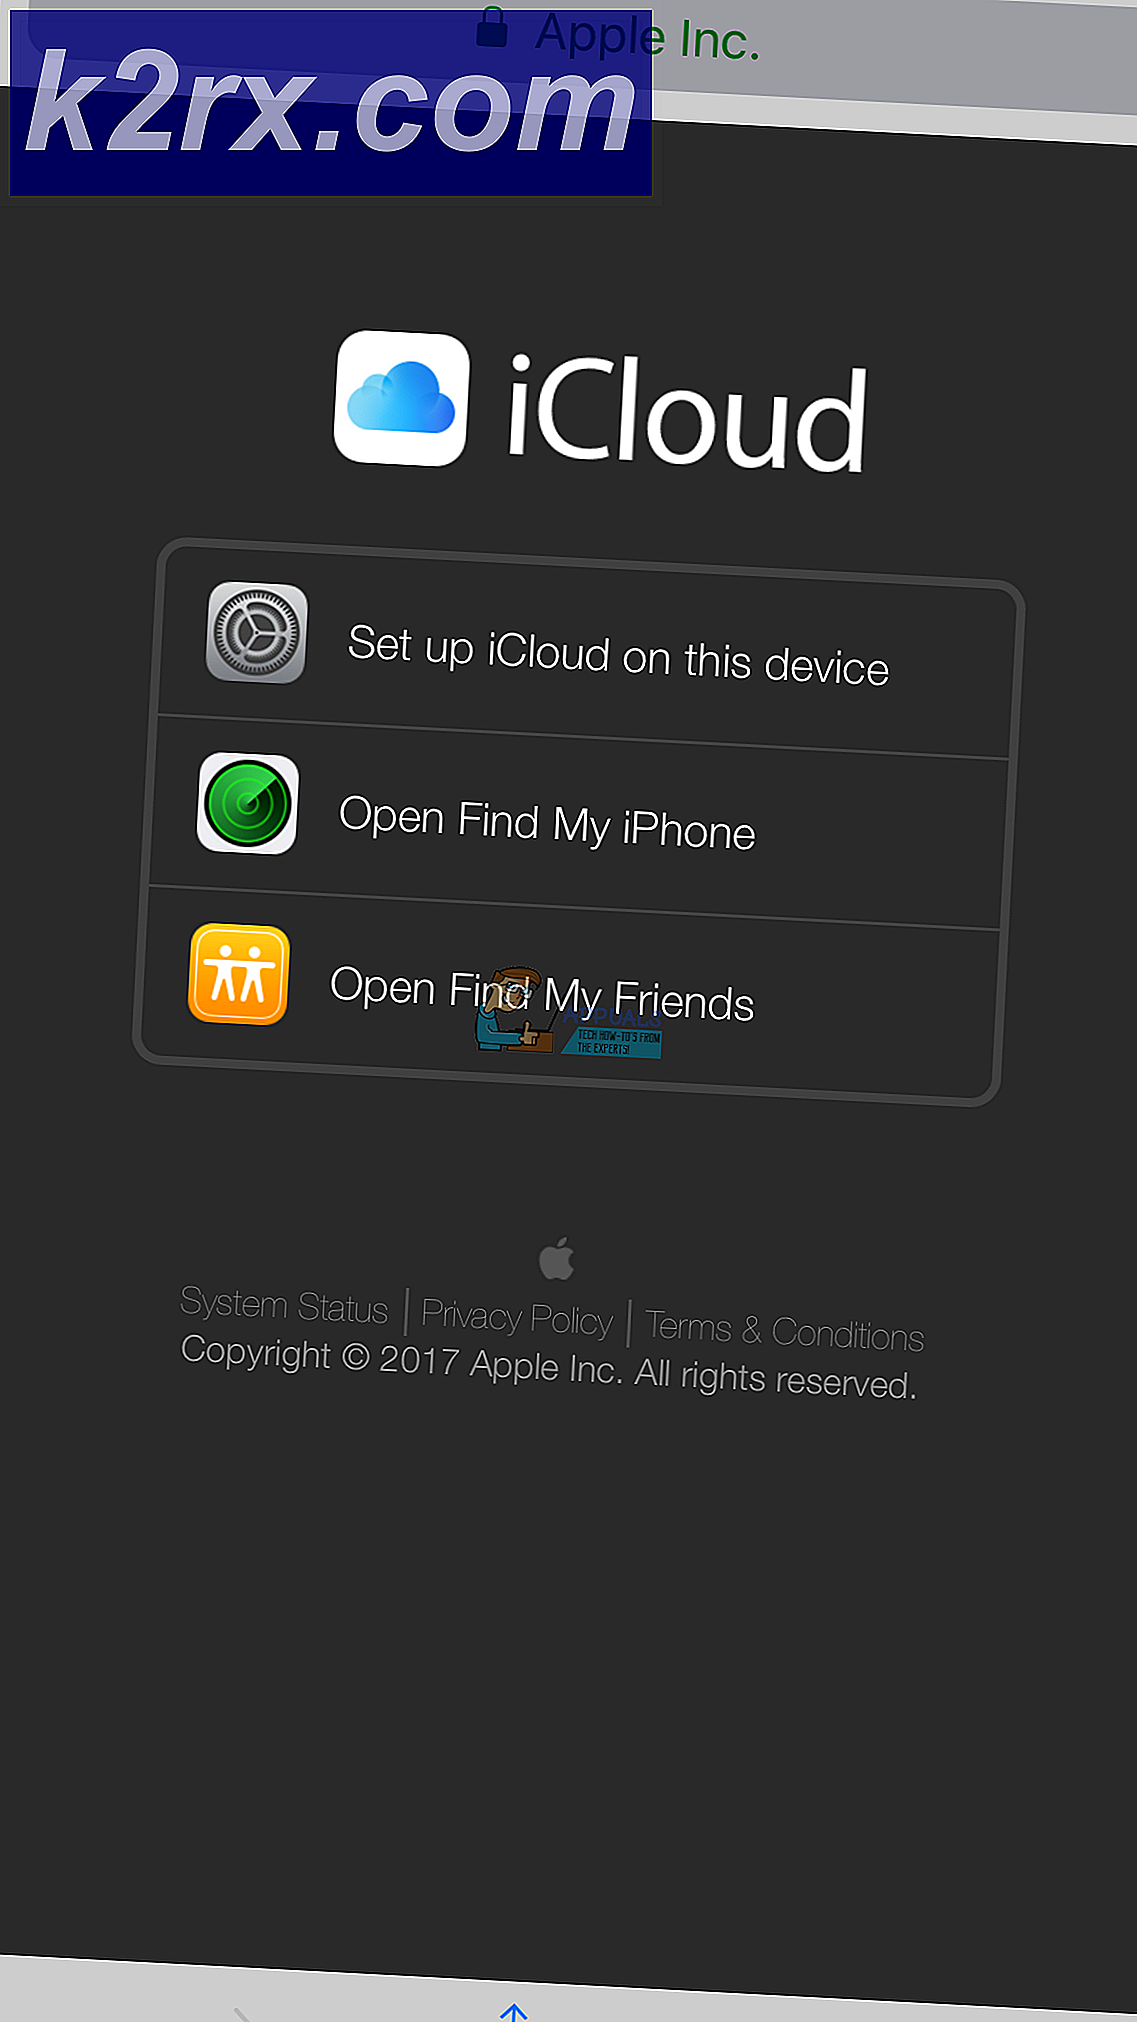 Slik logger du på iCloud.com Bruke iPhone eller iPad